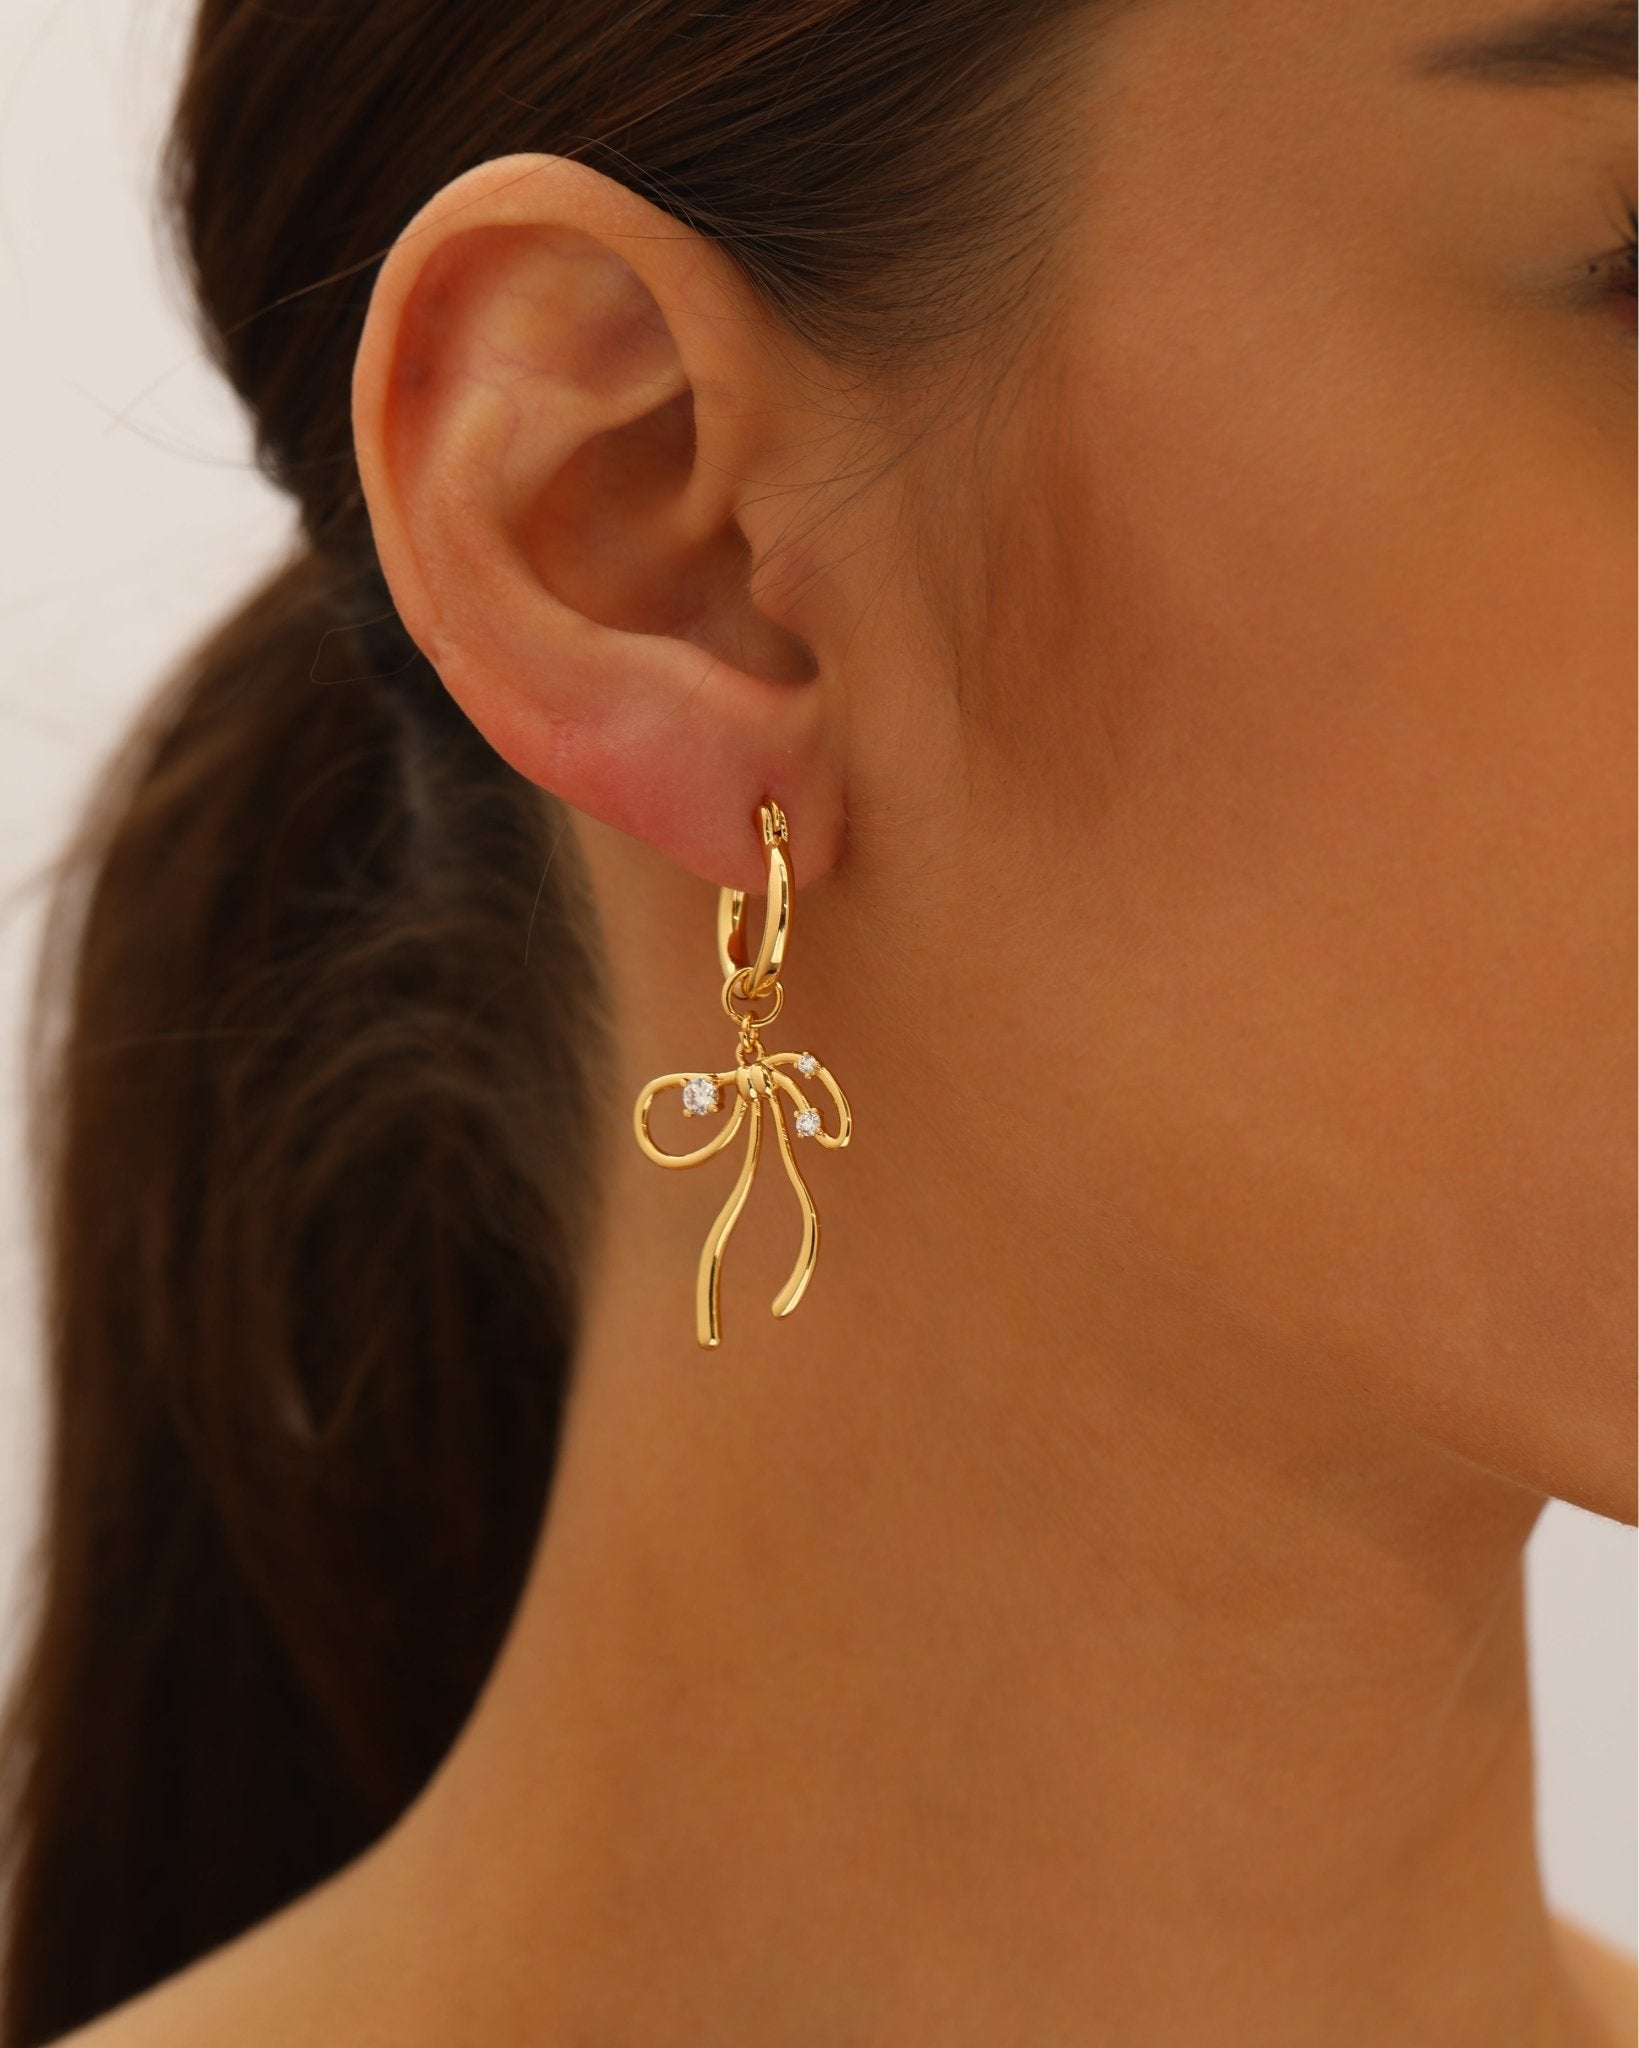 The Miffy Des boucles d'oreilles in Gold